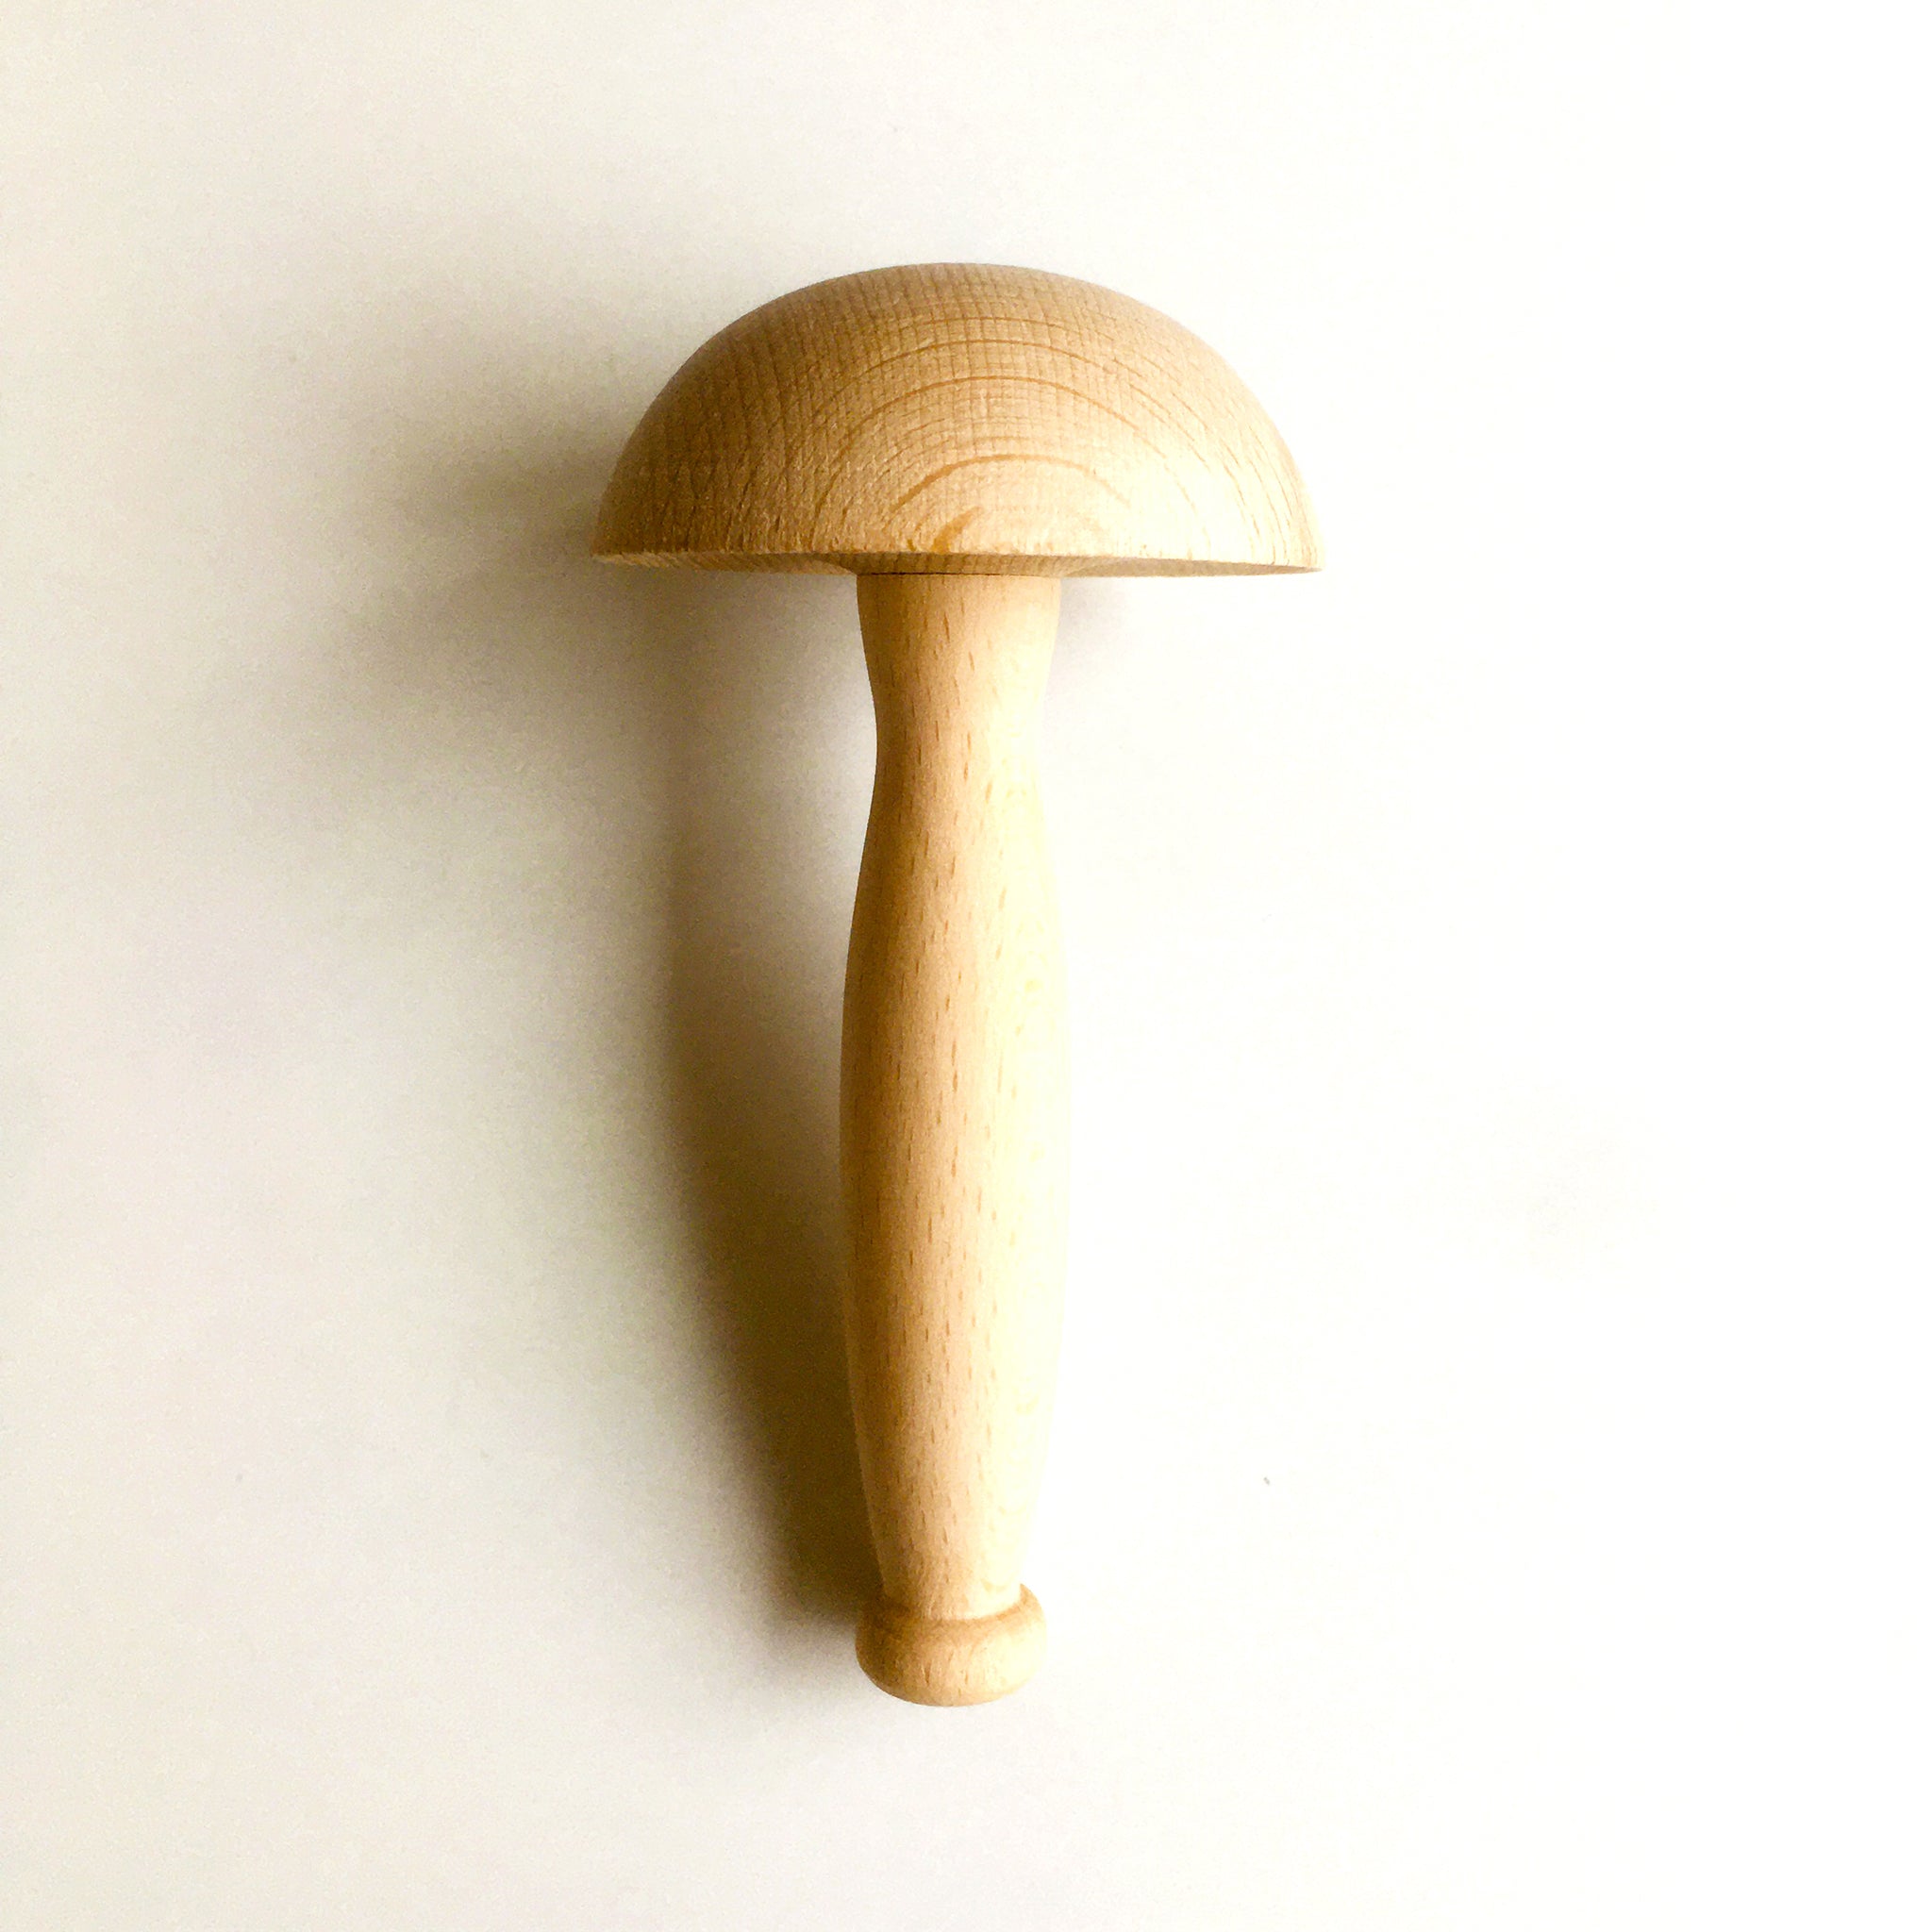 Darning mushroom, Beechwood, Germany